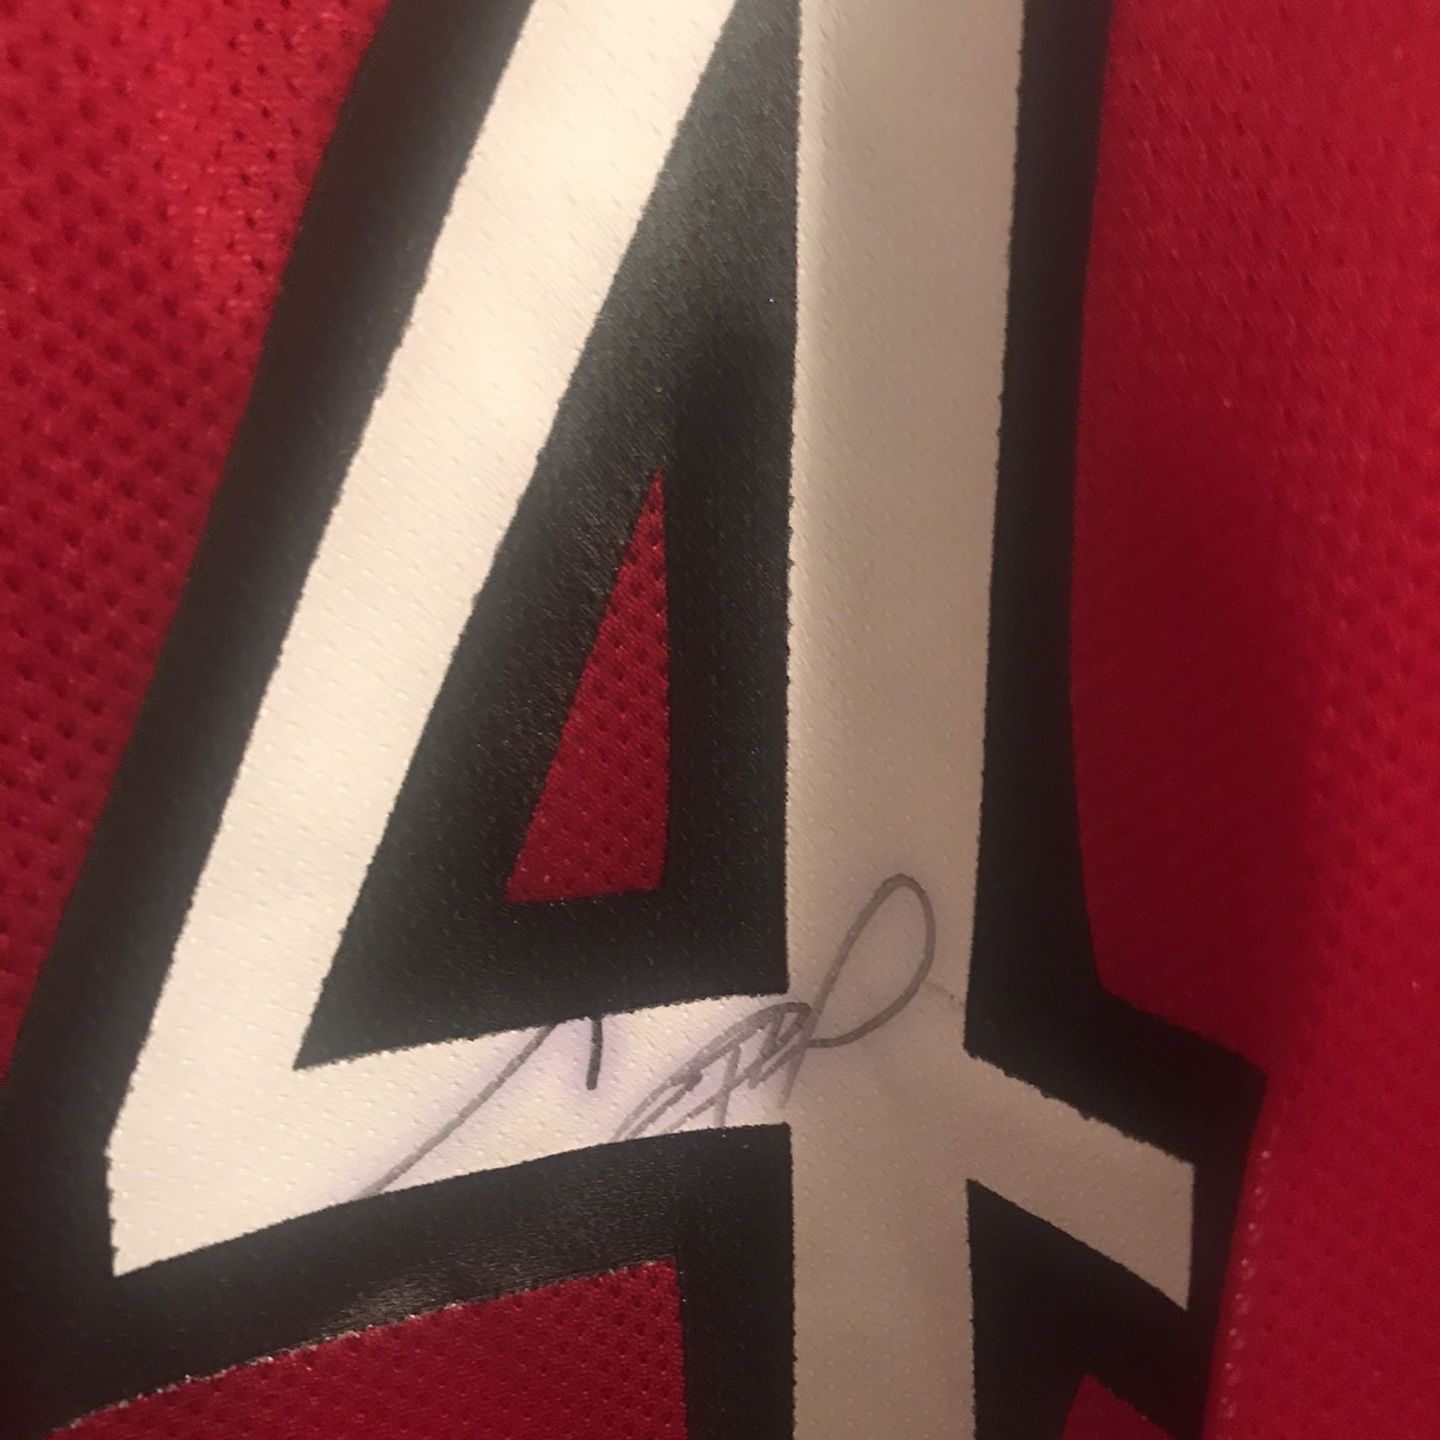 Chris Bosh Autographed Jersey